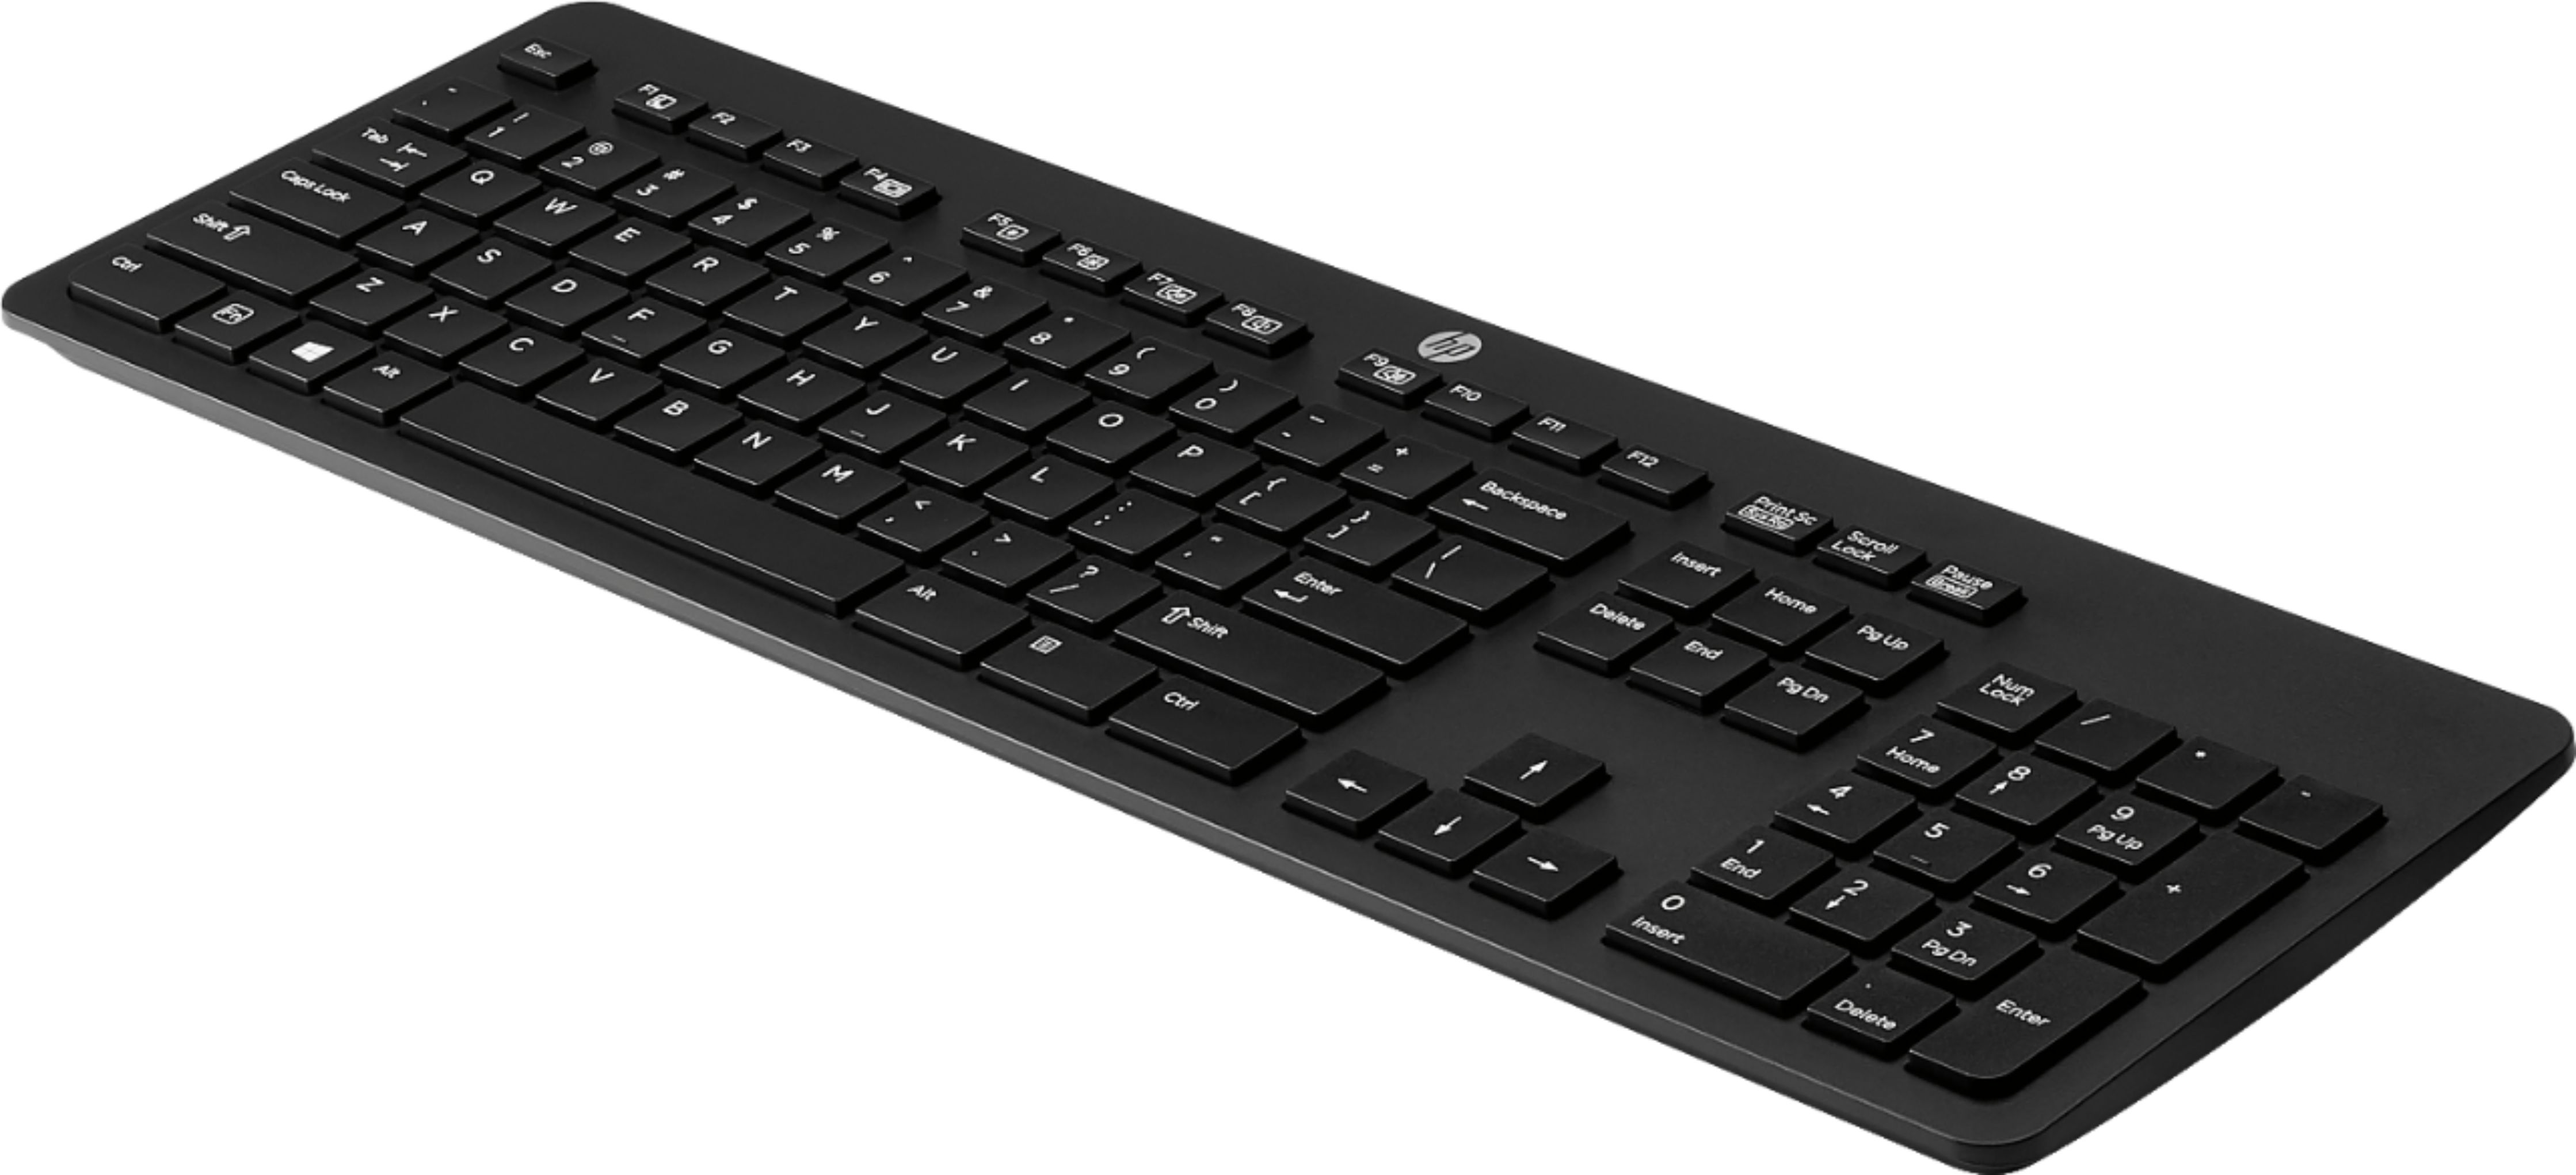 Customer Reviews Hp Pavilion 400 Wireless Membrane Keyboard Black